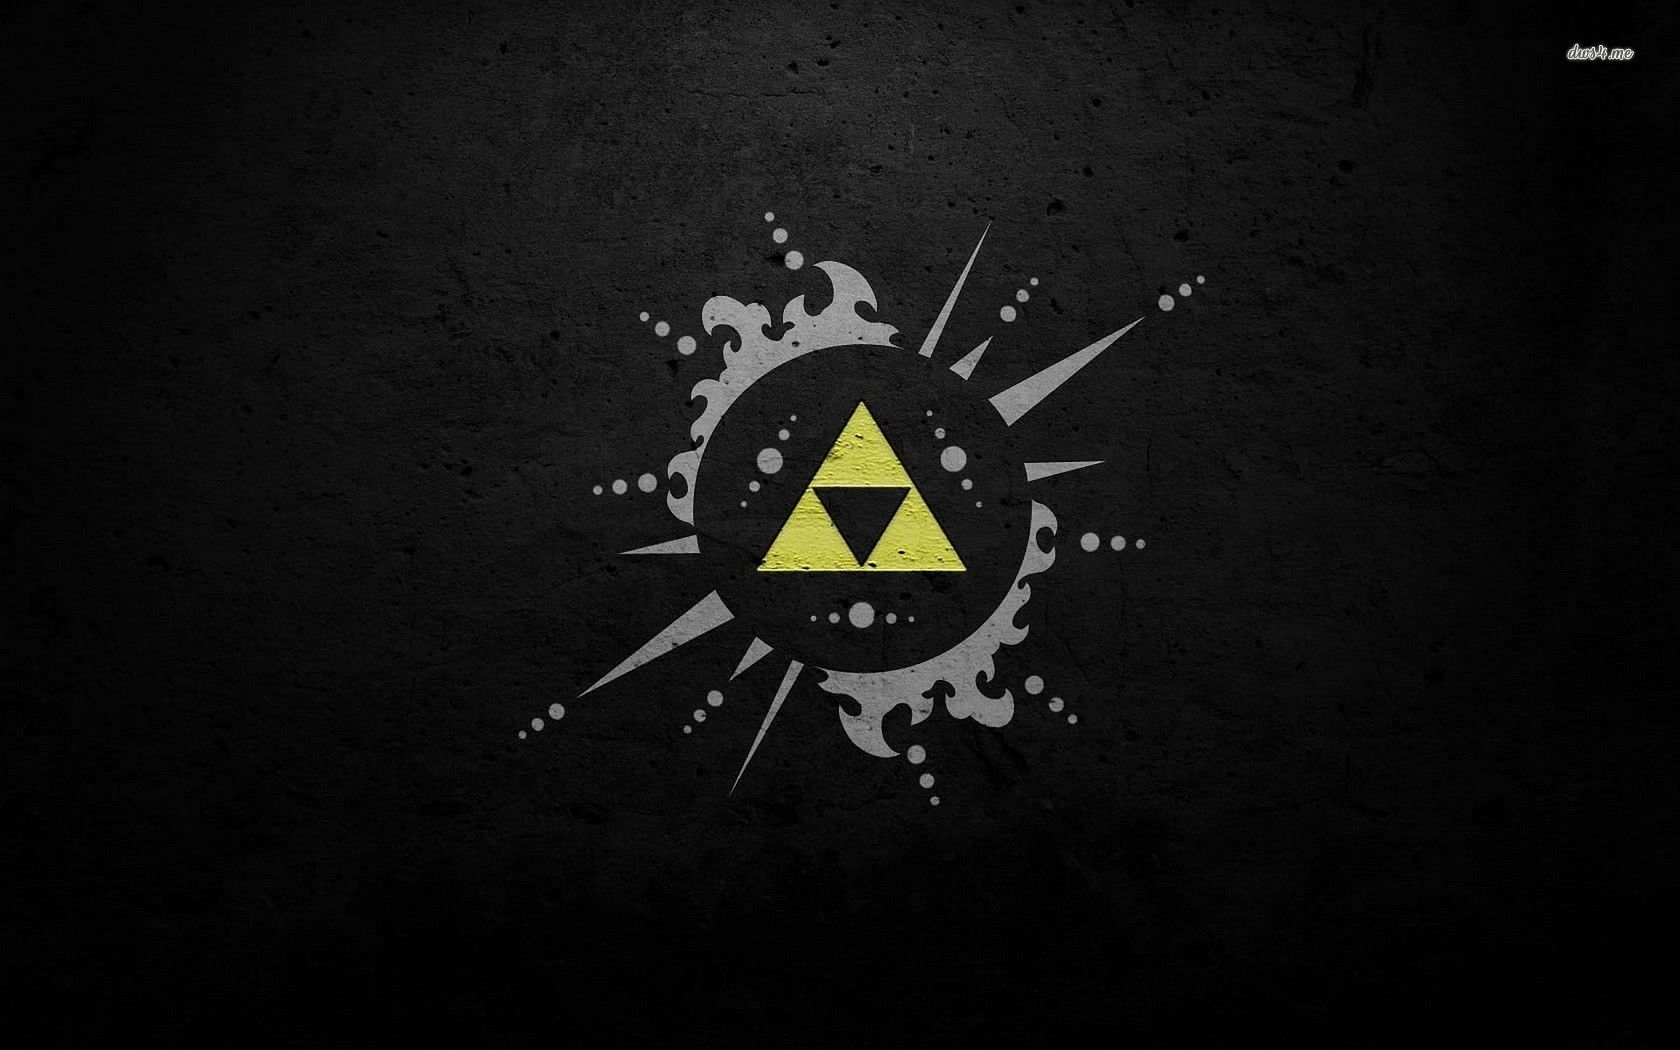 Triforce - The Legend of Zelda wallpaper - Game wallpapers -